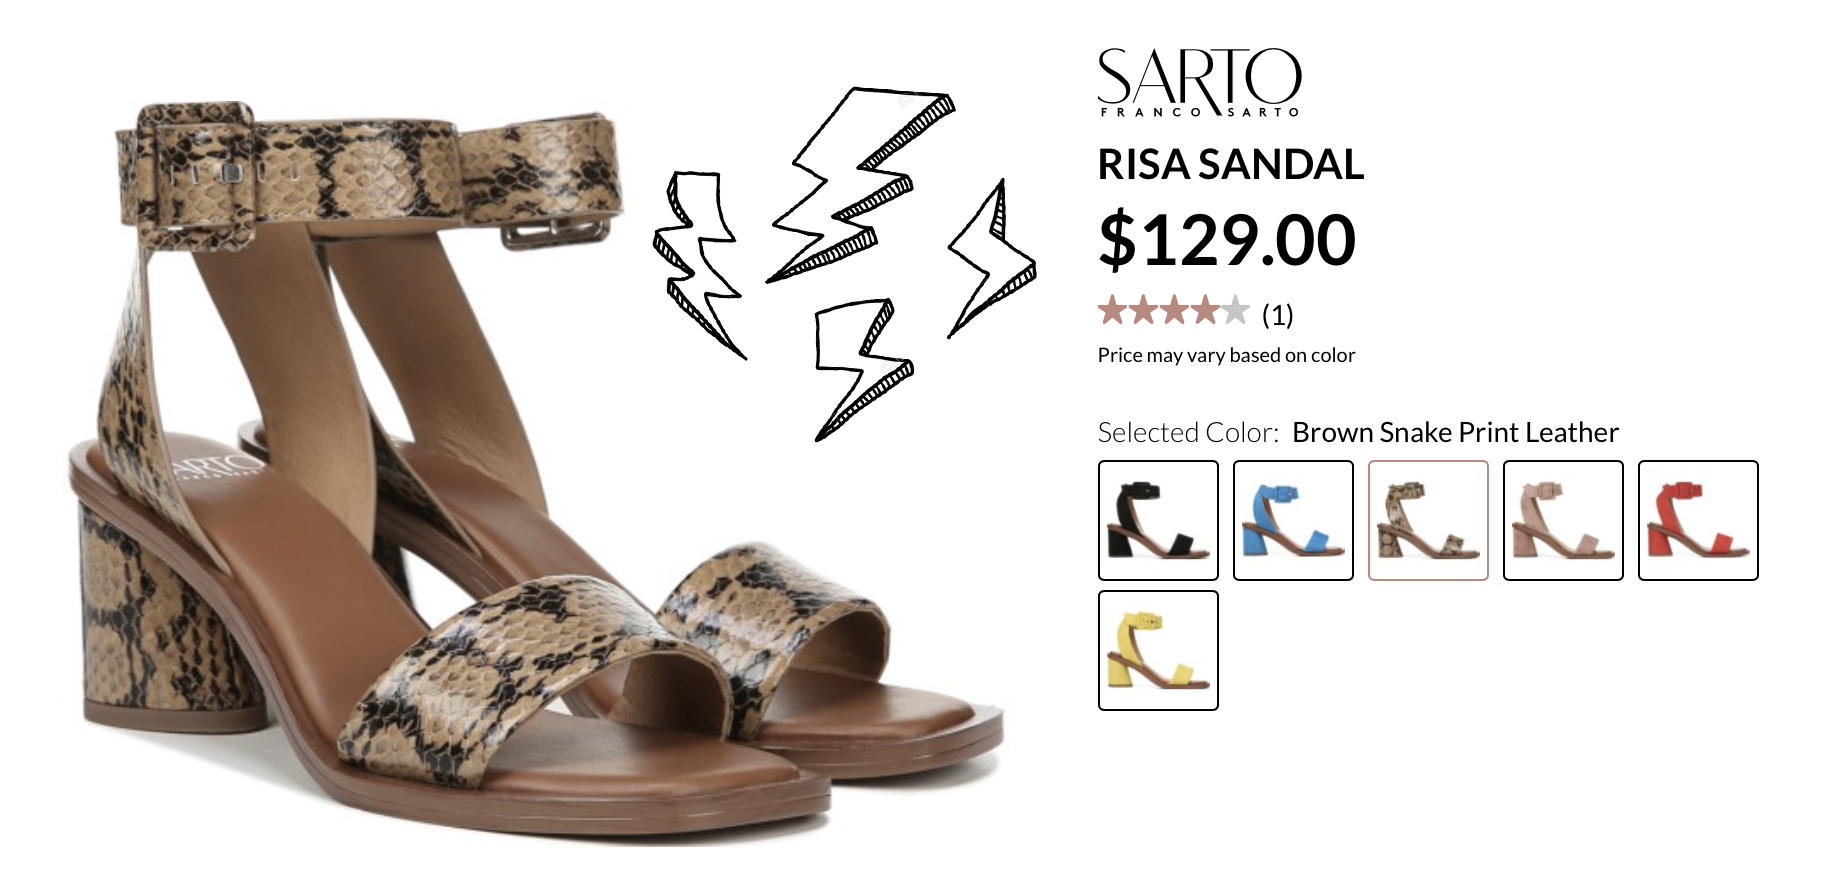 My Franco Sarto Summer 2019 Shoe Picks - Abby Saylor Armbruster